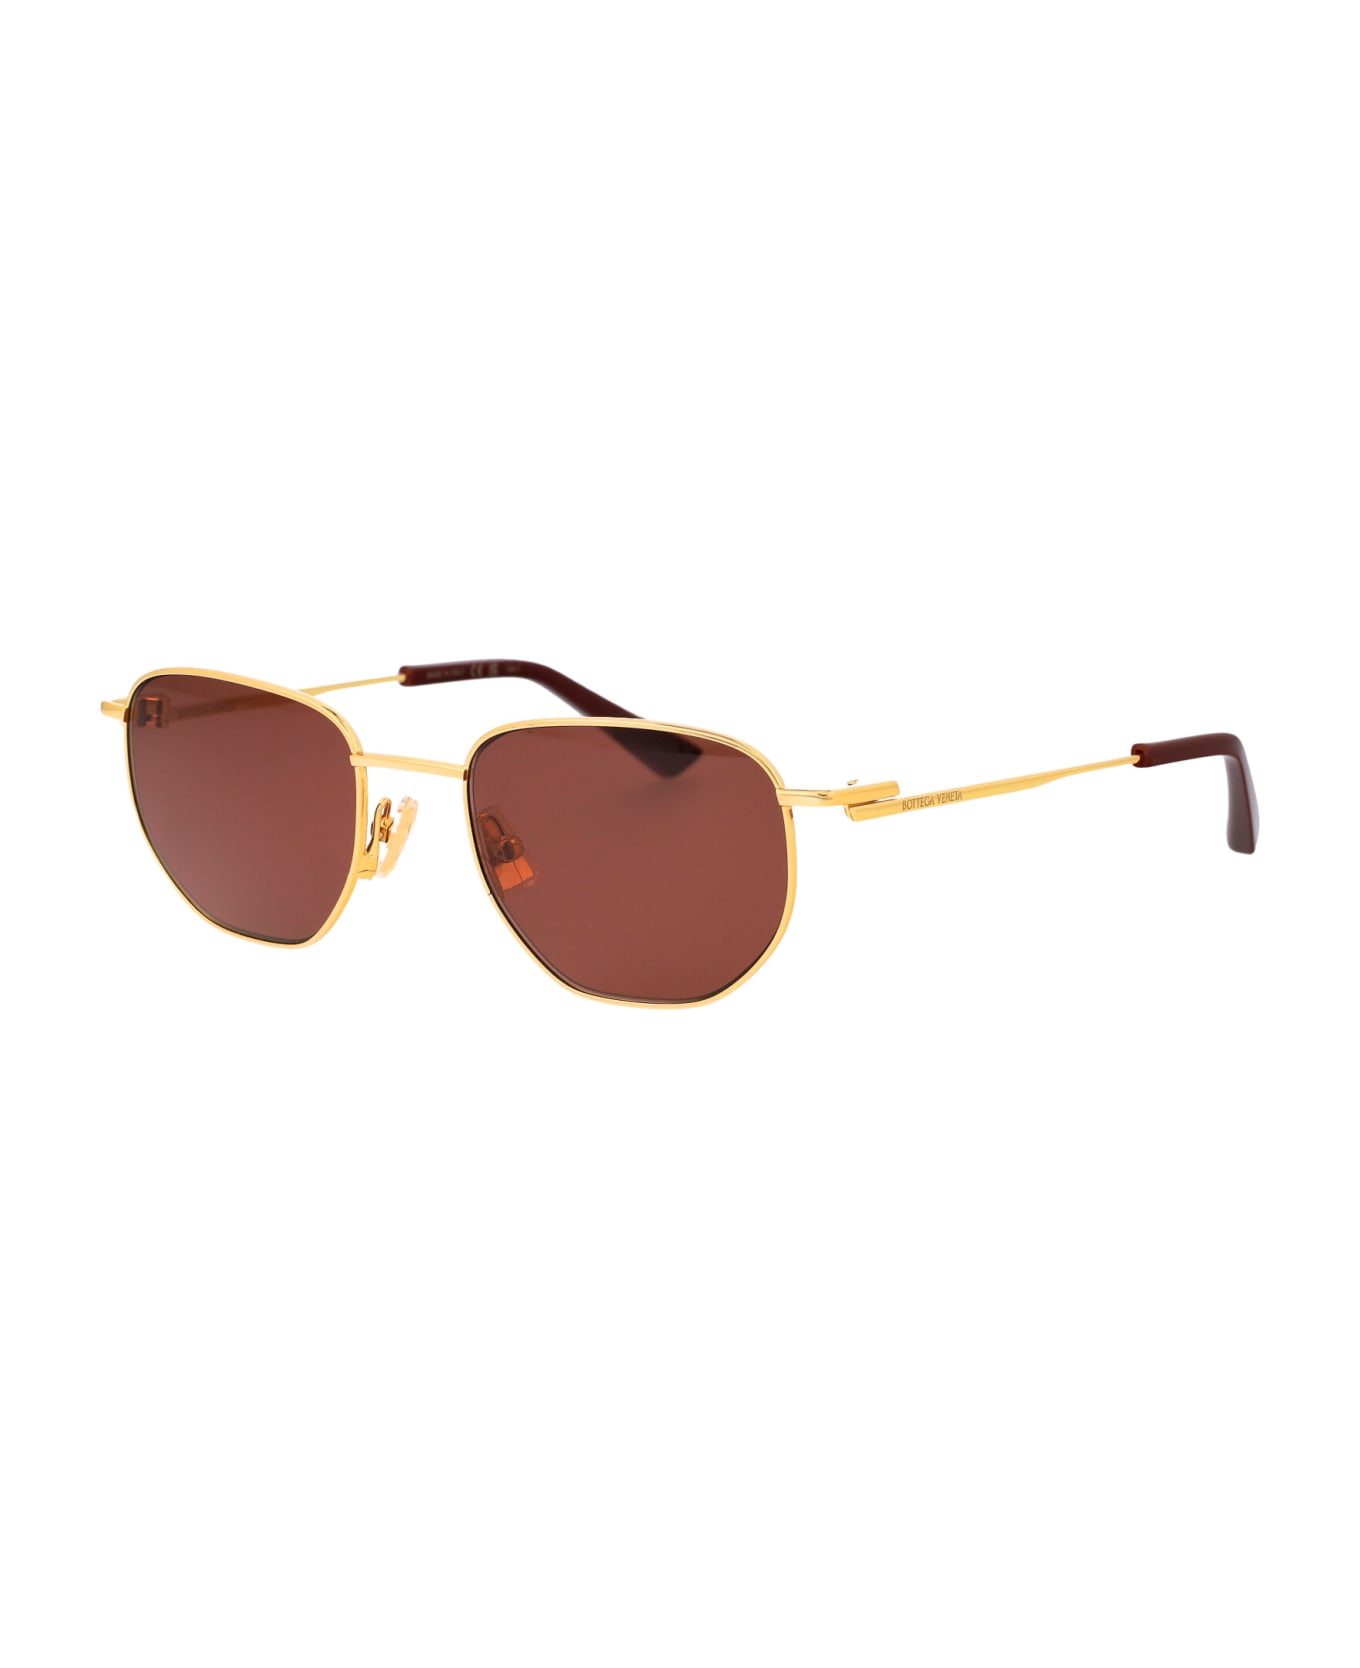 Bottega Veneta Eyewear Bv1301s Sunglasses - 003 GOLD GOLD BROWN